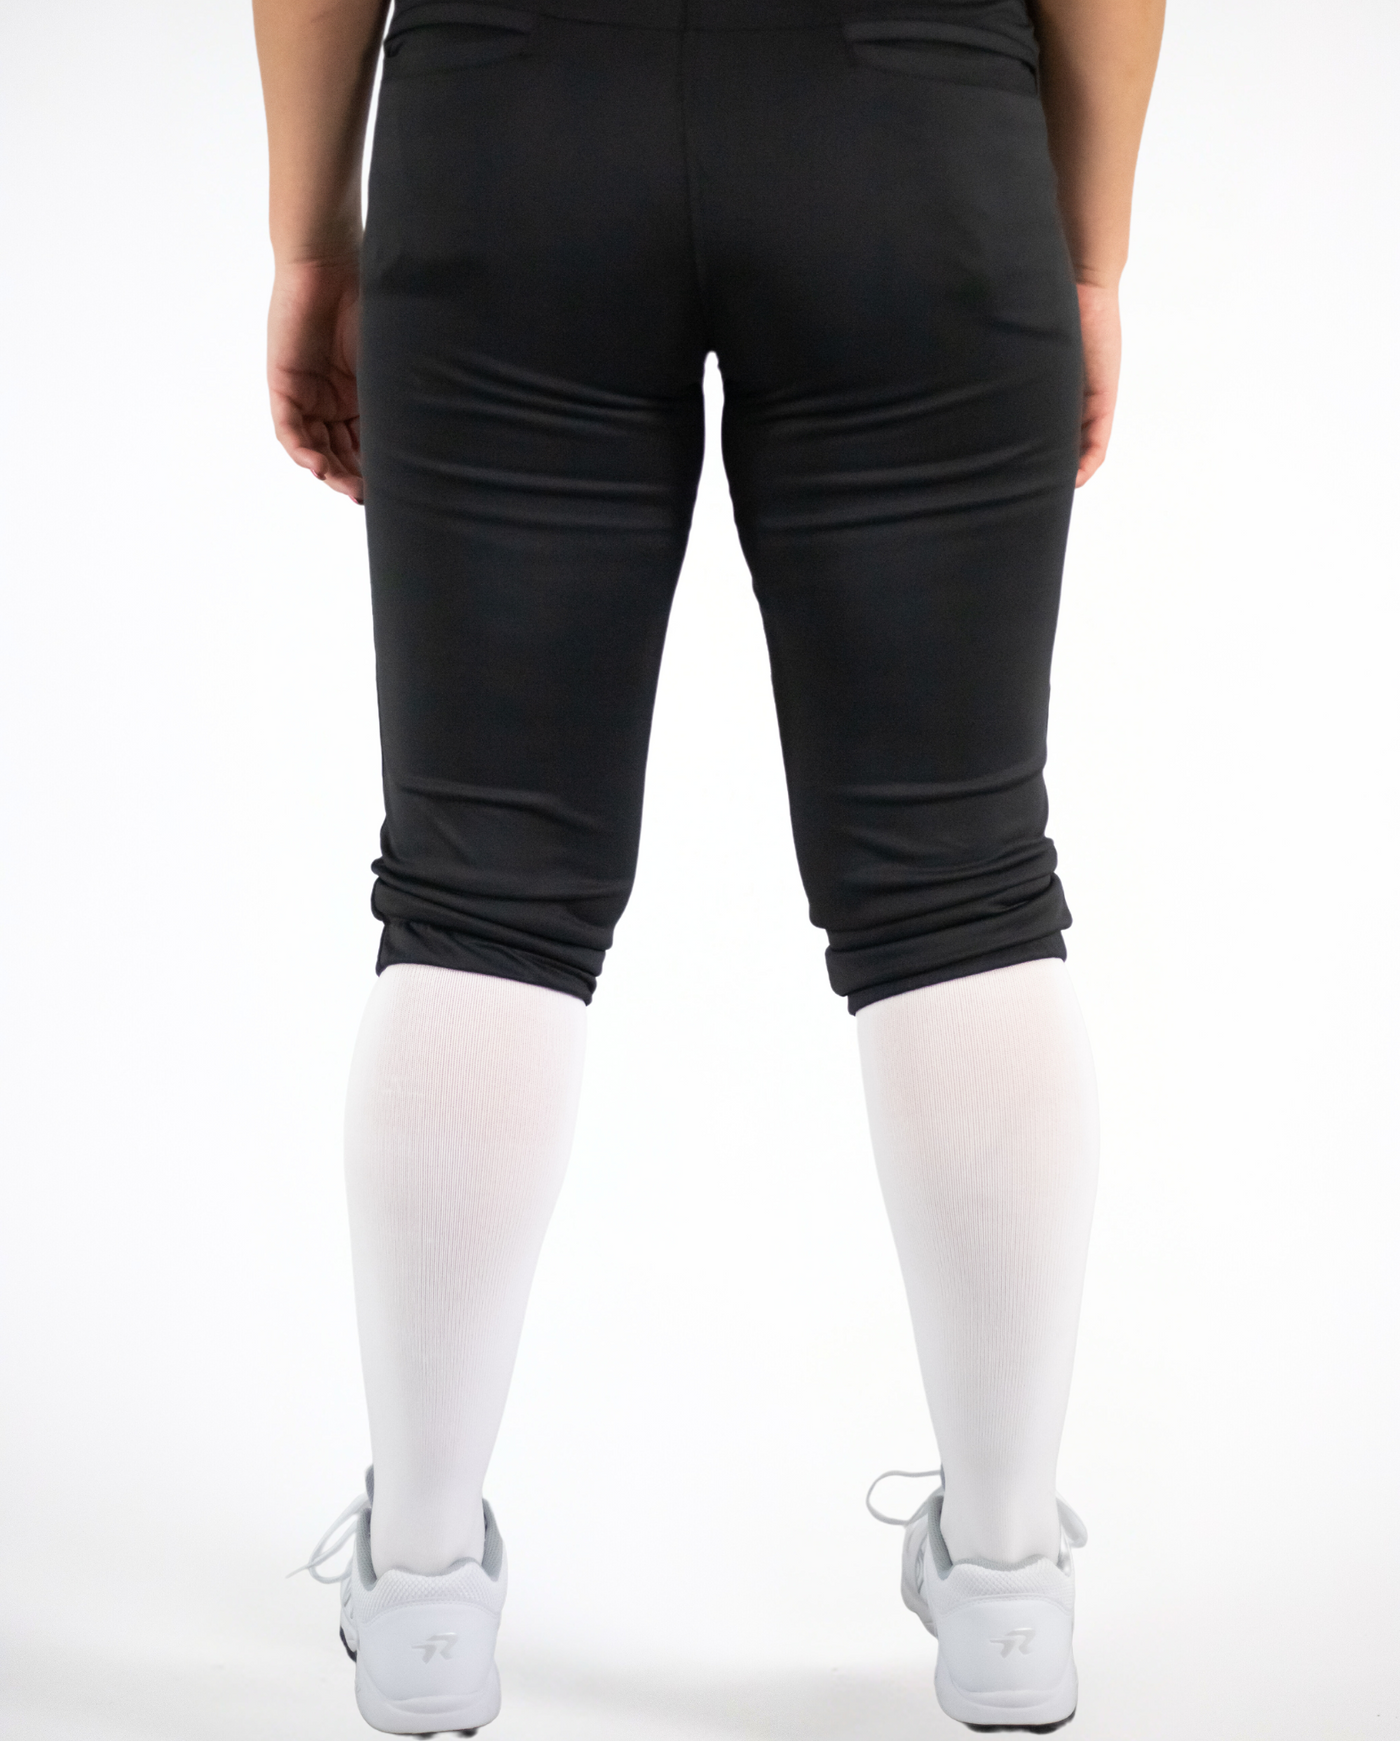 Women's Revolution Softball Pants - Athletic